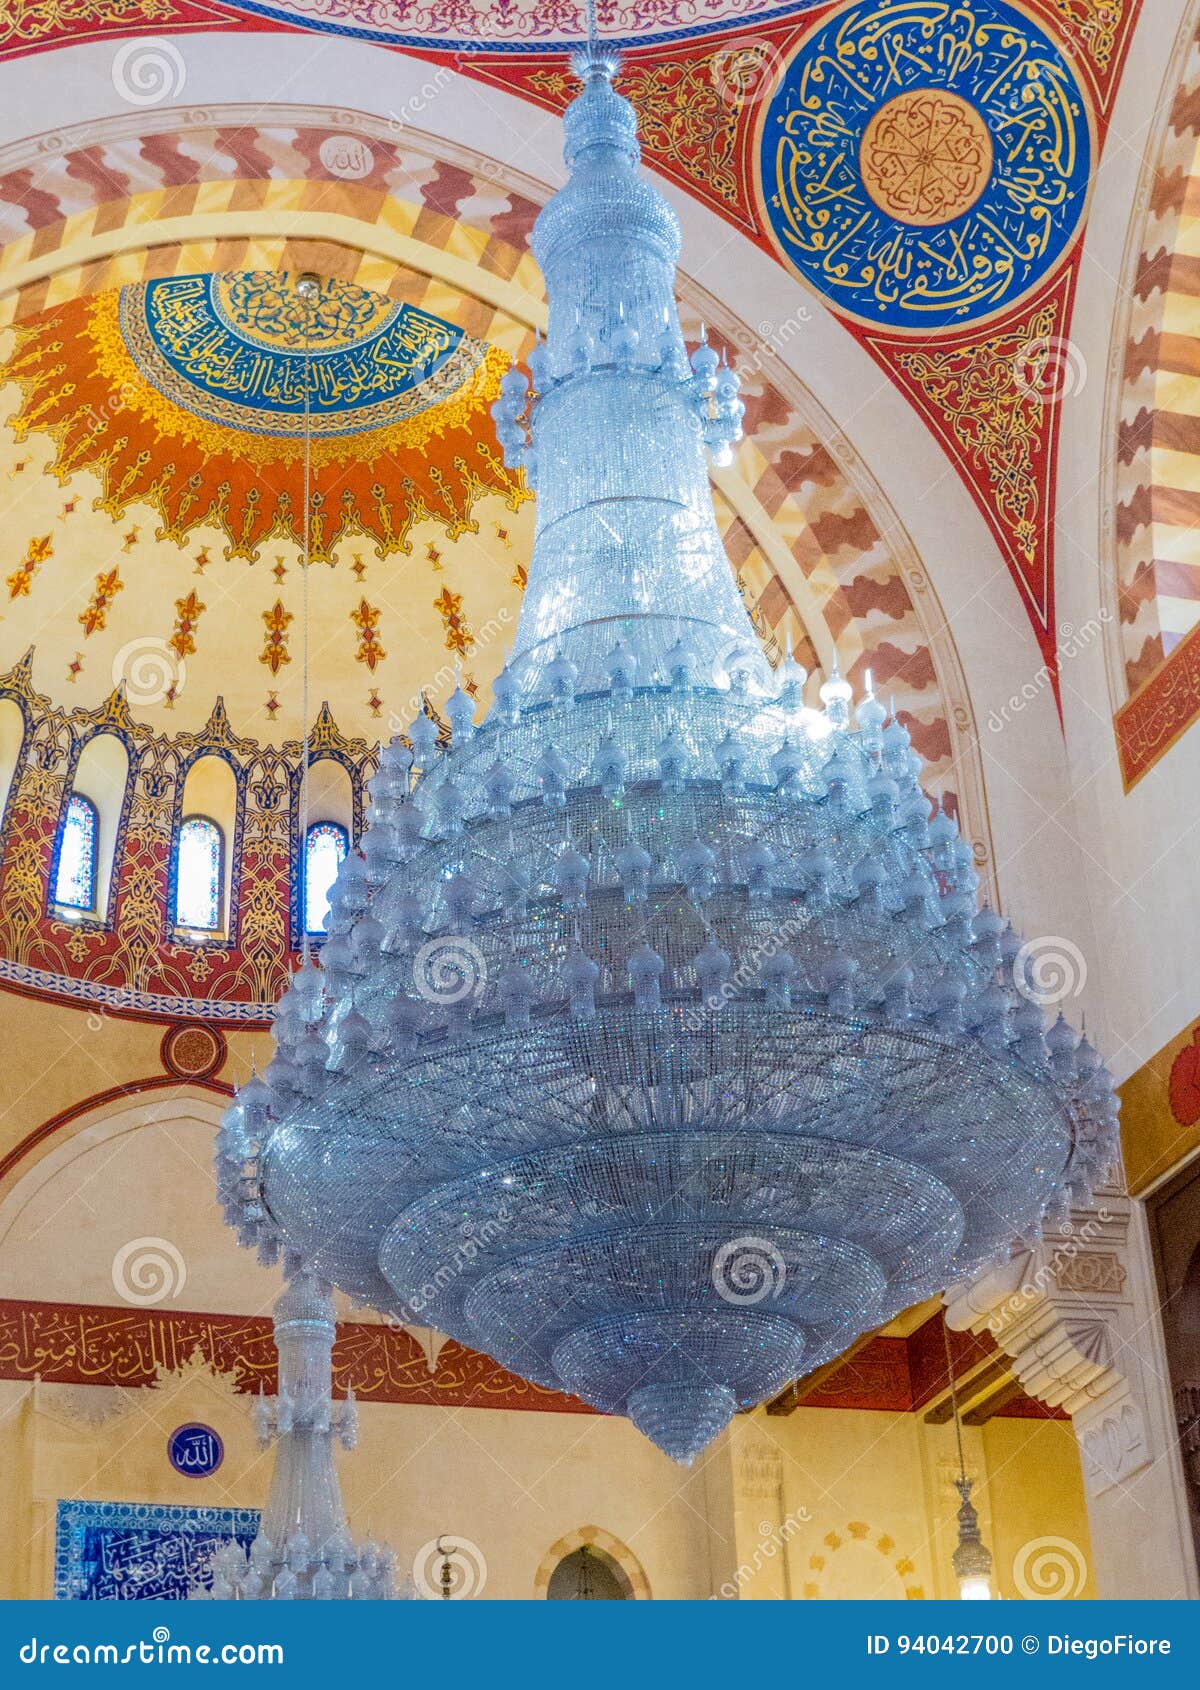 interiors of the mohammad al-amin mosque, beirut, lebanon